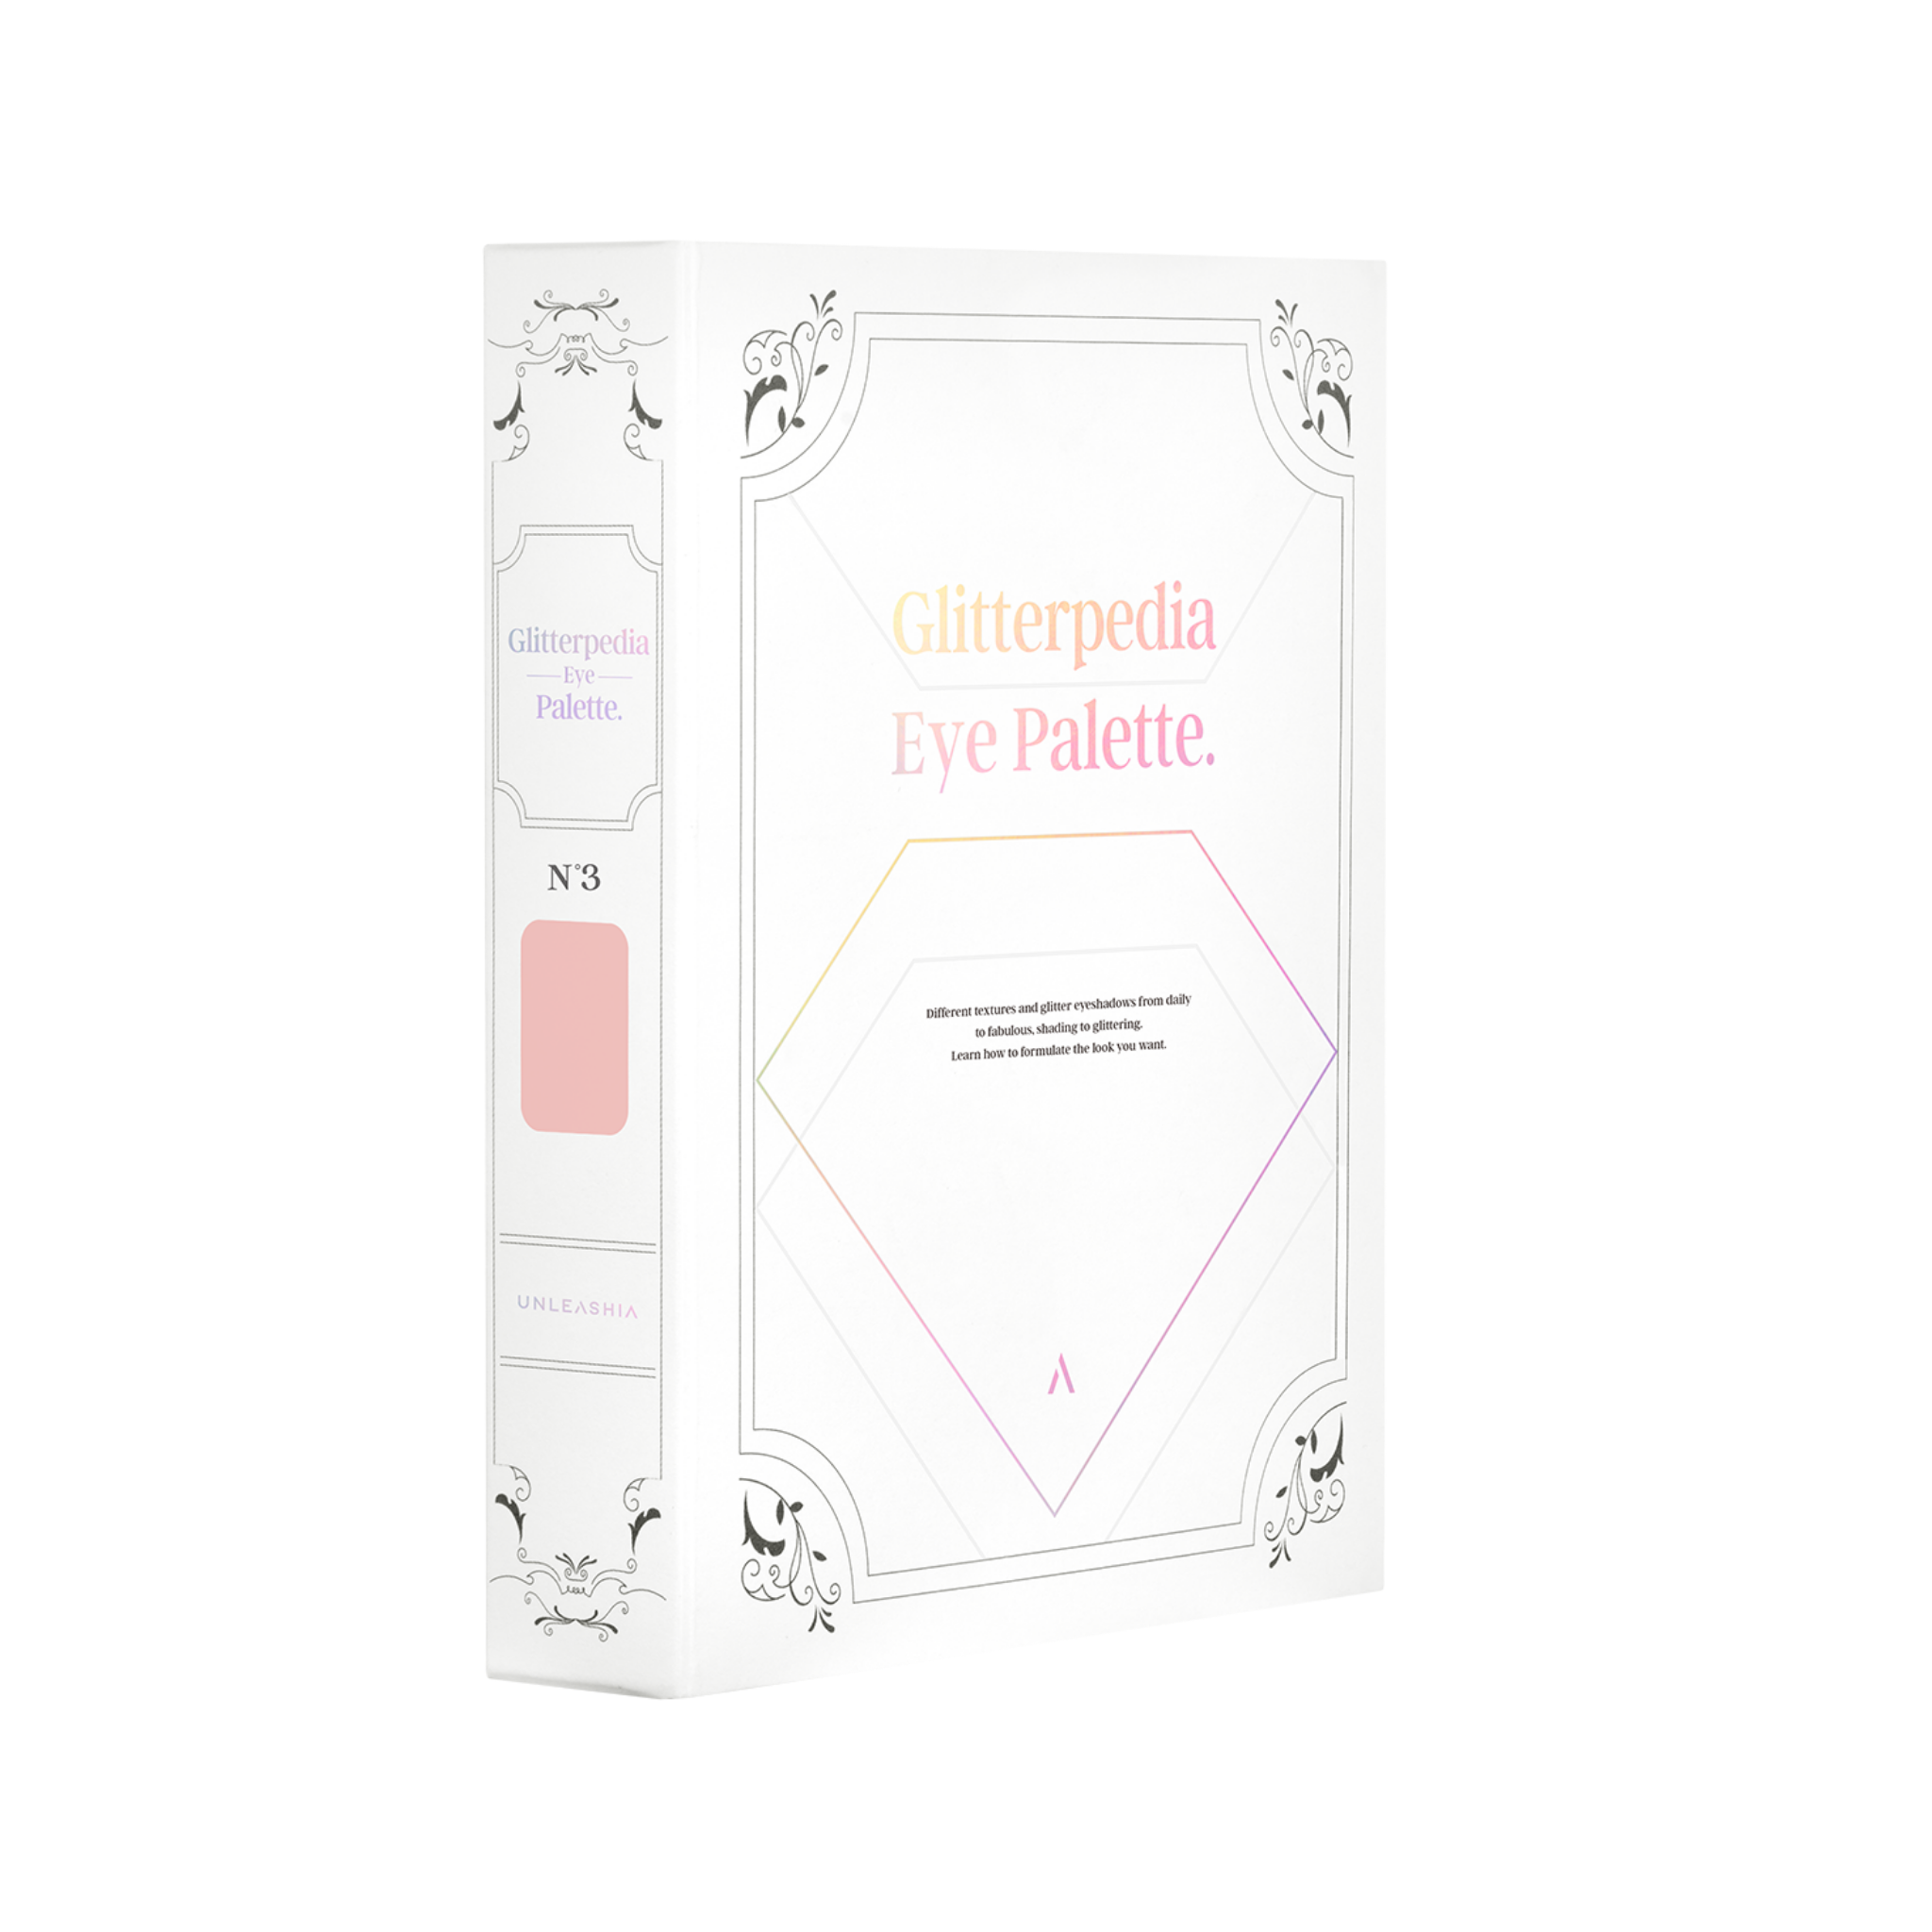 UNLEASHIA Glitterpedia Eye Palette - N°3 All of Coral Pink packaging